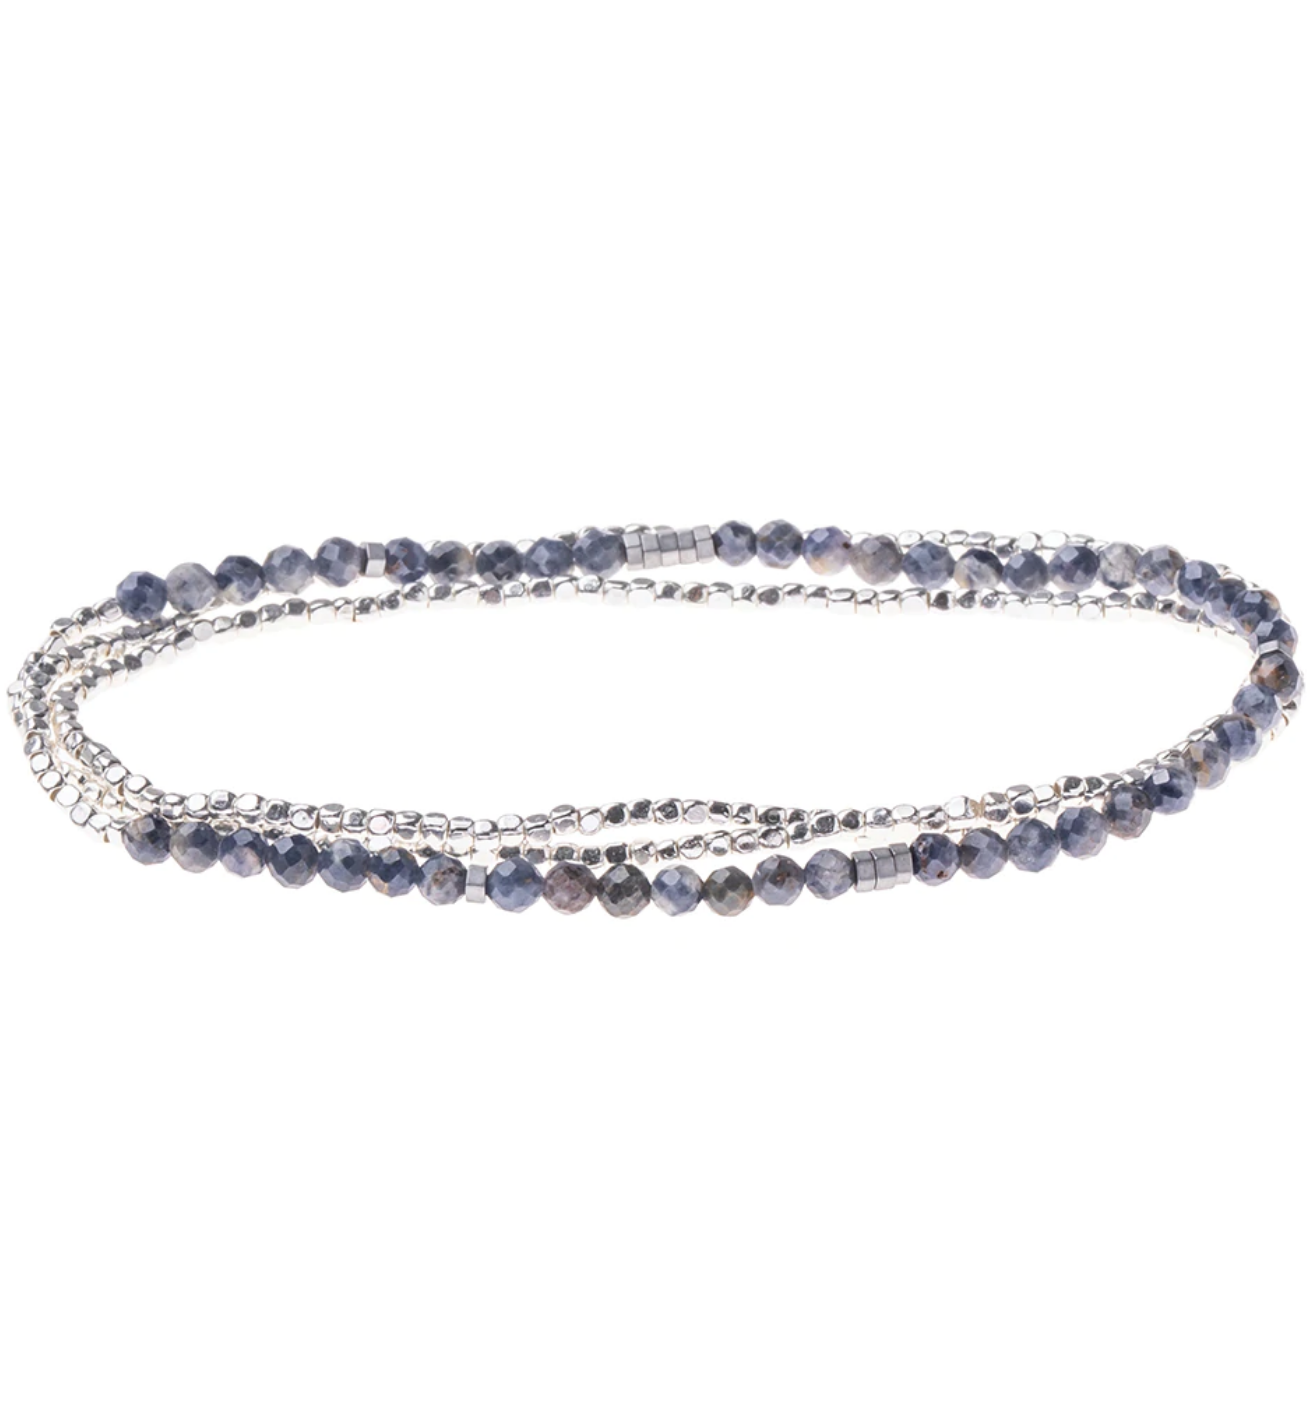 Delicate Iolite and Sunstone: Wrap Bracelet & Necklace